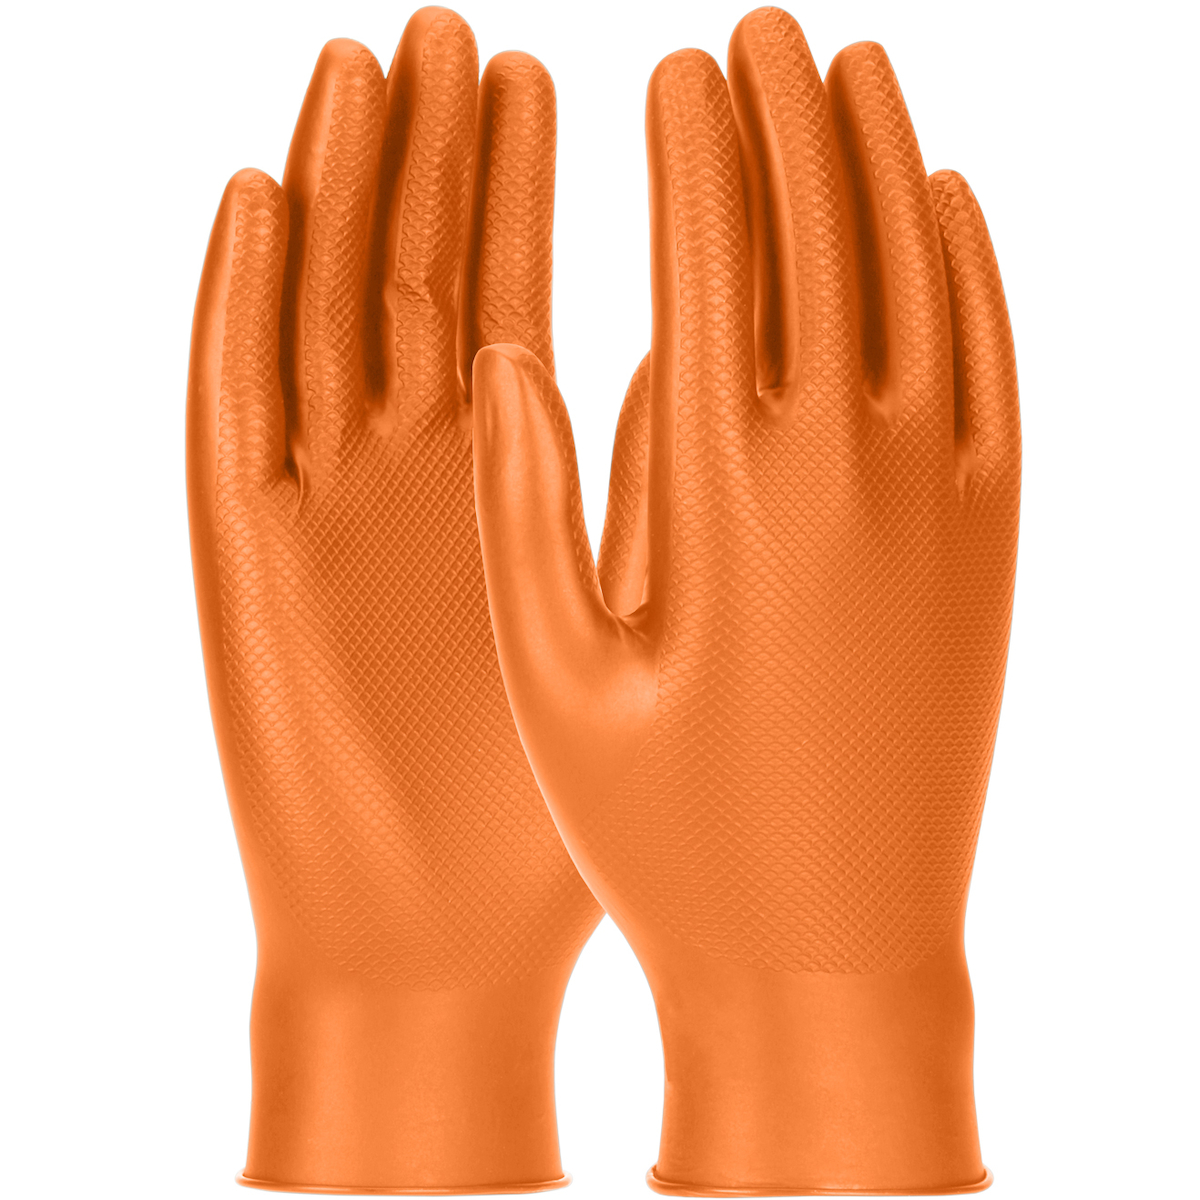 GRIPPAZ SKINS ORANGE 6 MIL NITRILE 50/BX - Tagged Gloves